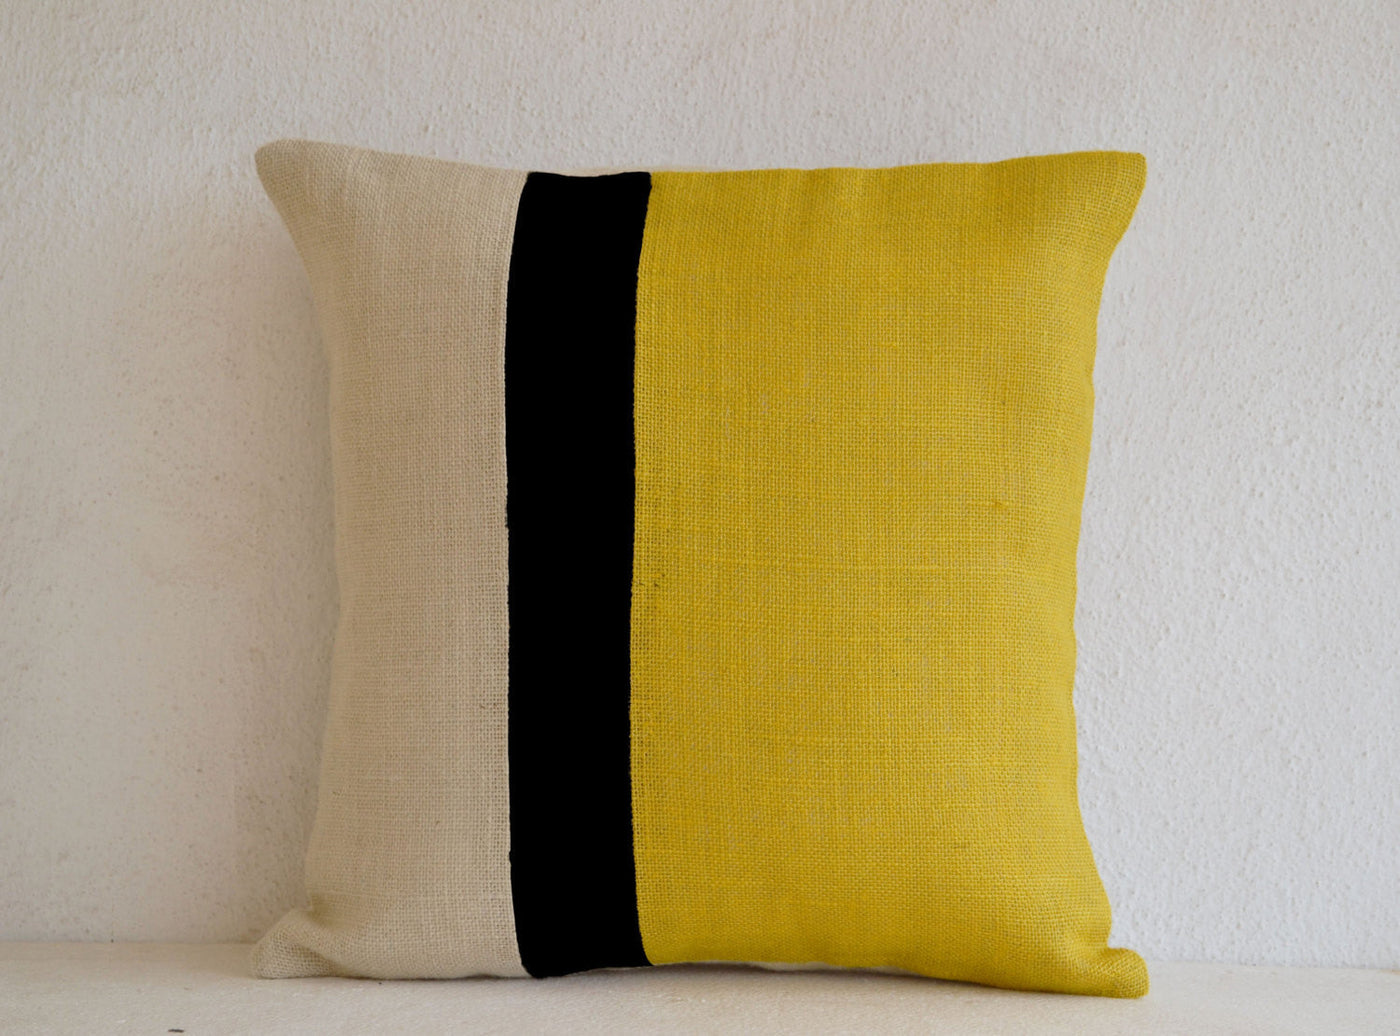 Yellow Pillow - Throw Pillows color block - Burlap Pillow - Decorative cushion cover- Spring Throw pillow gift pillow 16X16 by Amore Beauté